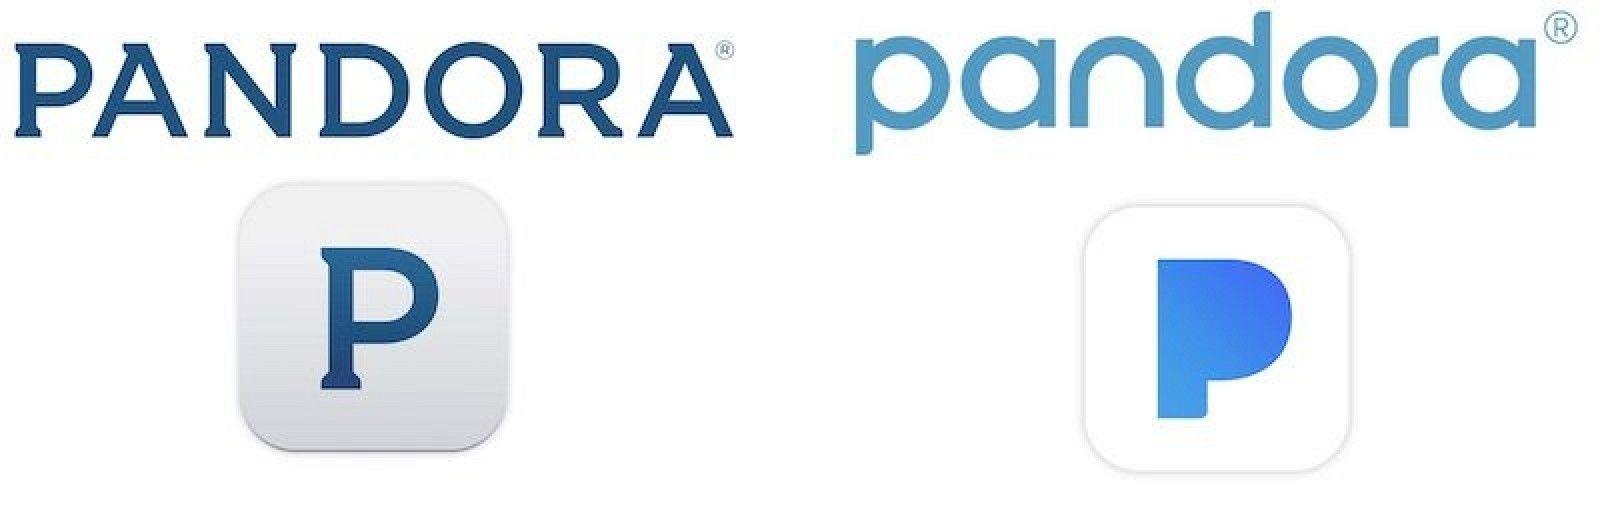 New Pandora Logo - Pandora Rebrands Mobile App Ahead Of On Demand Music Service Launch